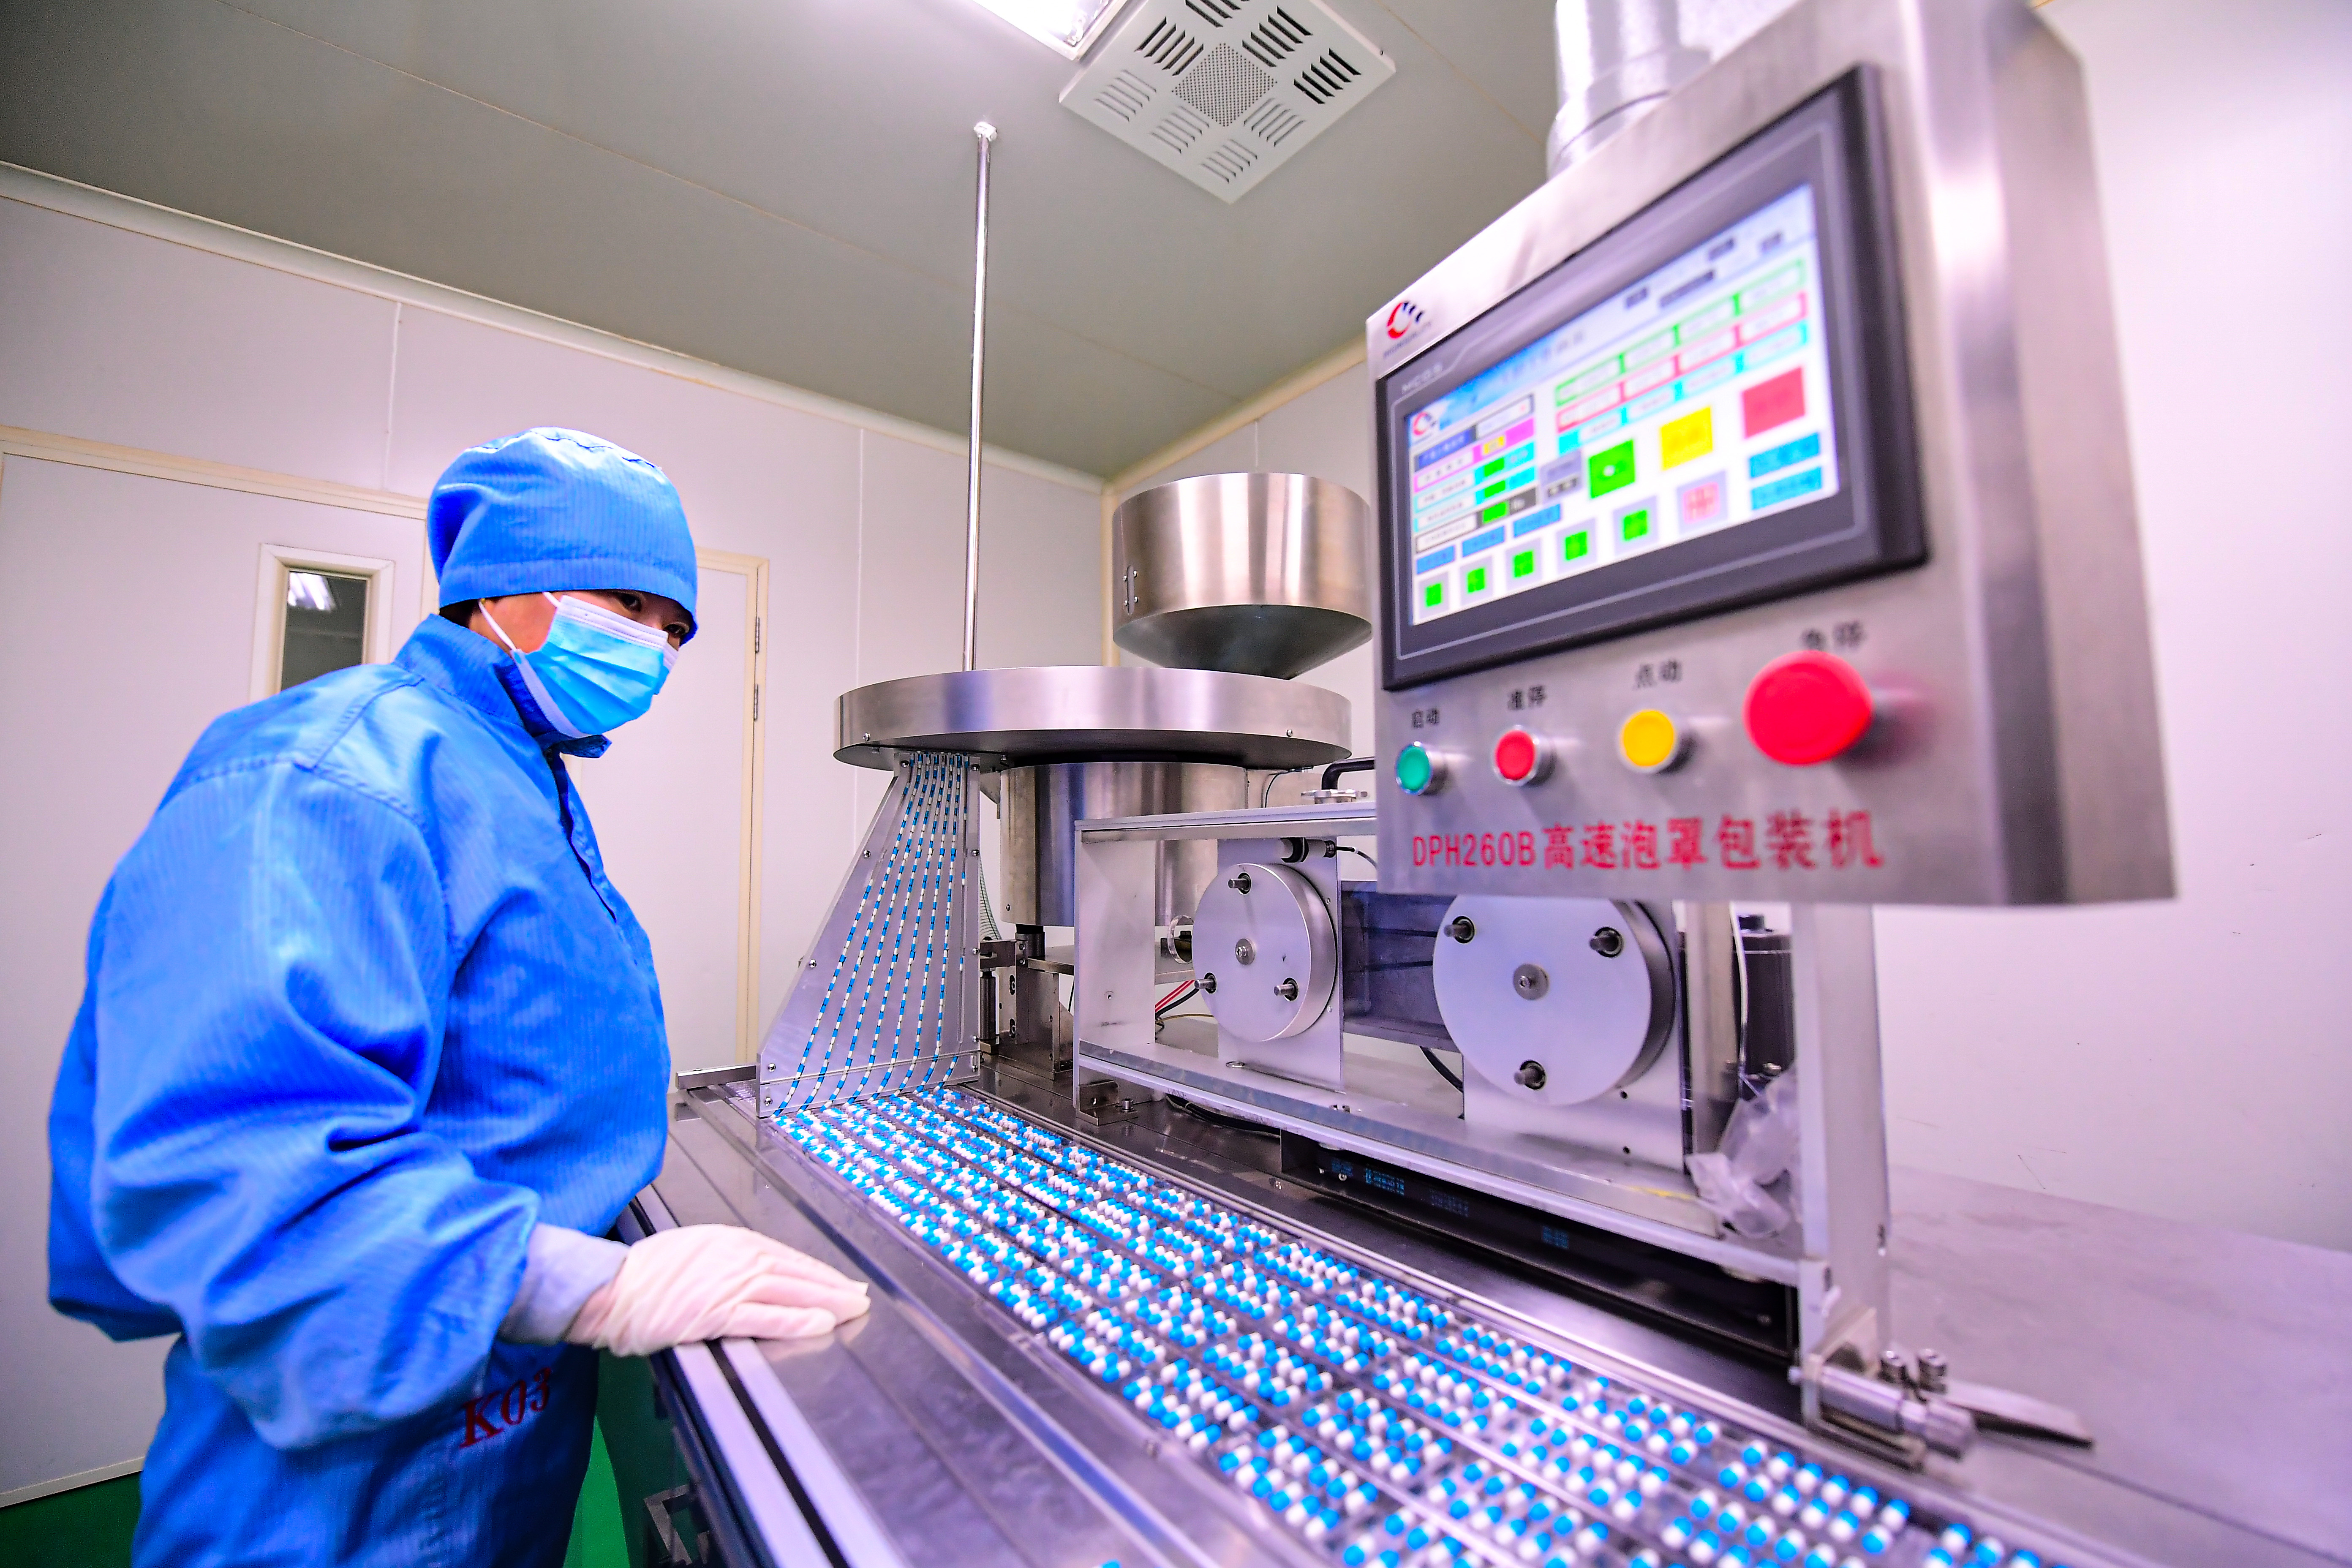 Cough Medicines Manufacturing In Shenyang